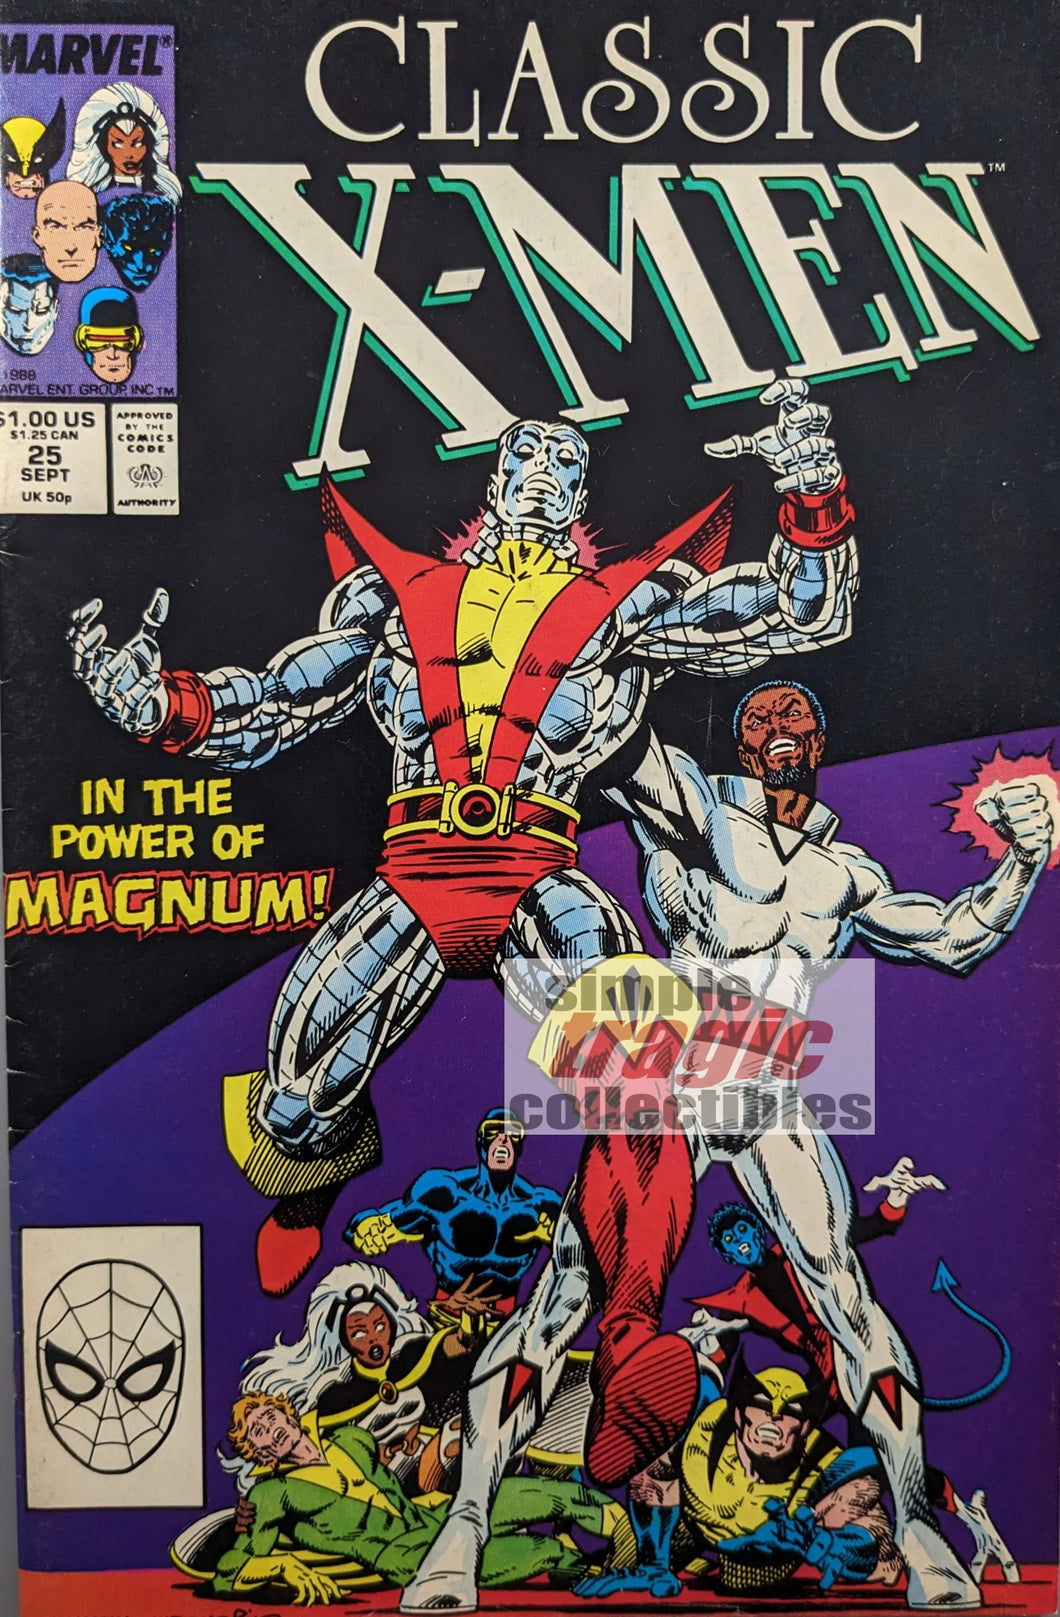 Classic X-Men #25 Comic Book Cover Art by Kerry Gammill